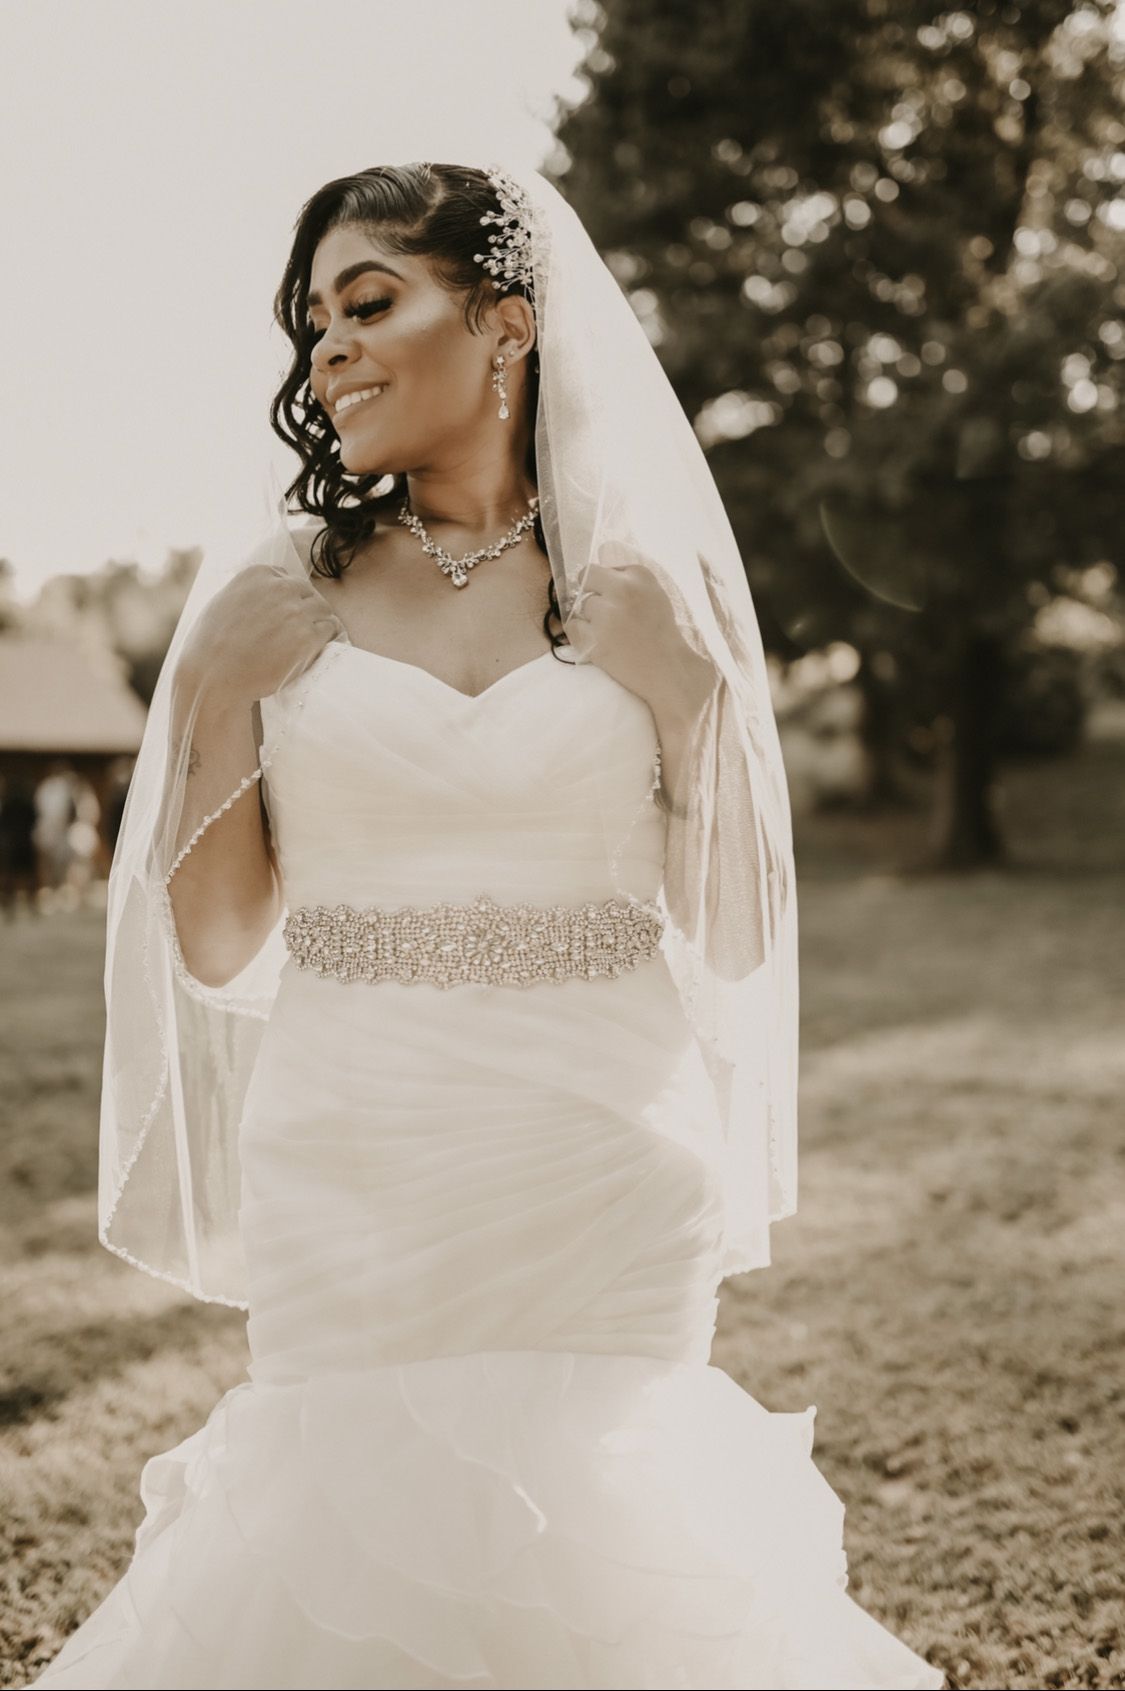 bride in wedding dress